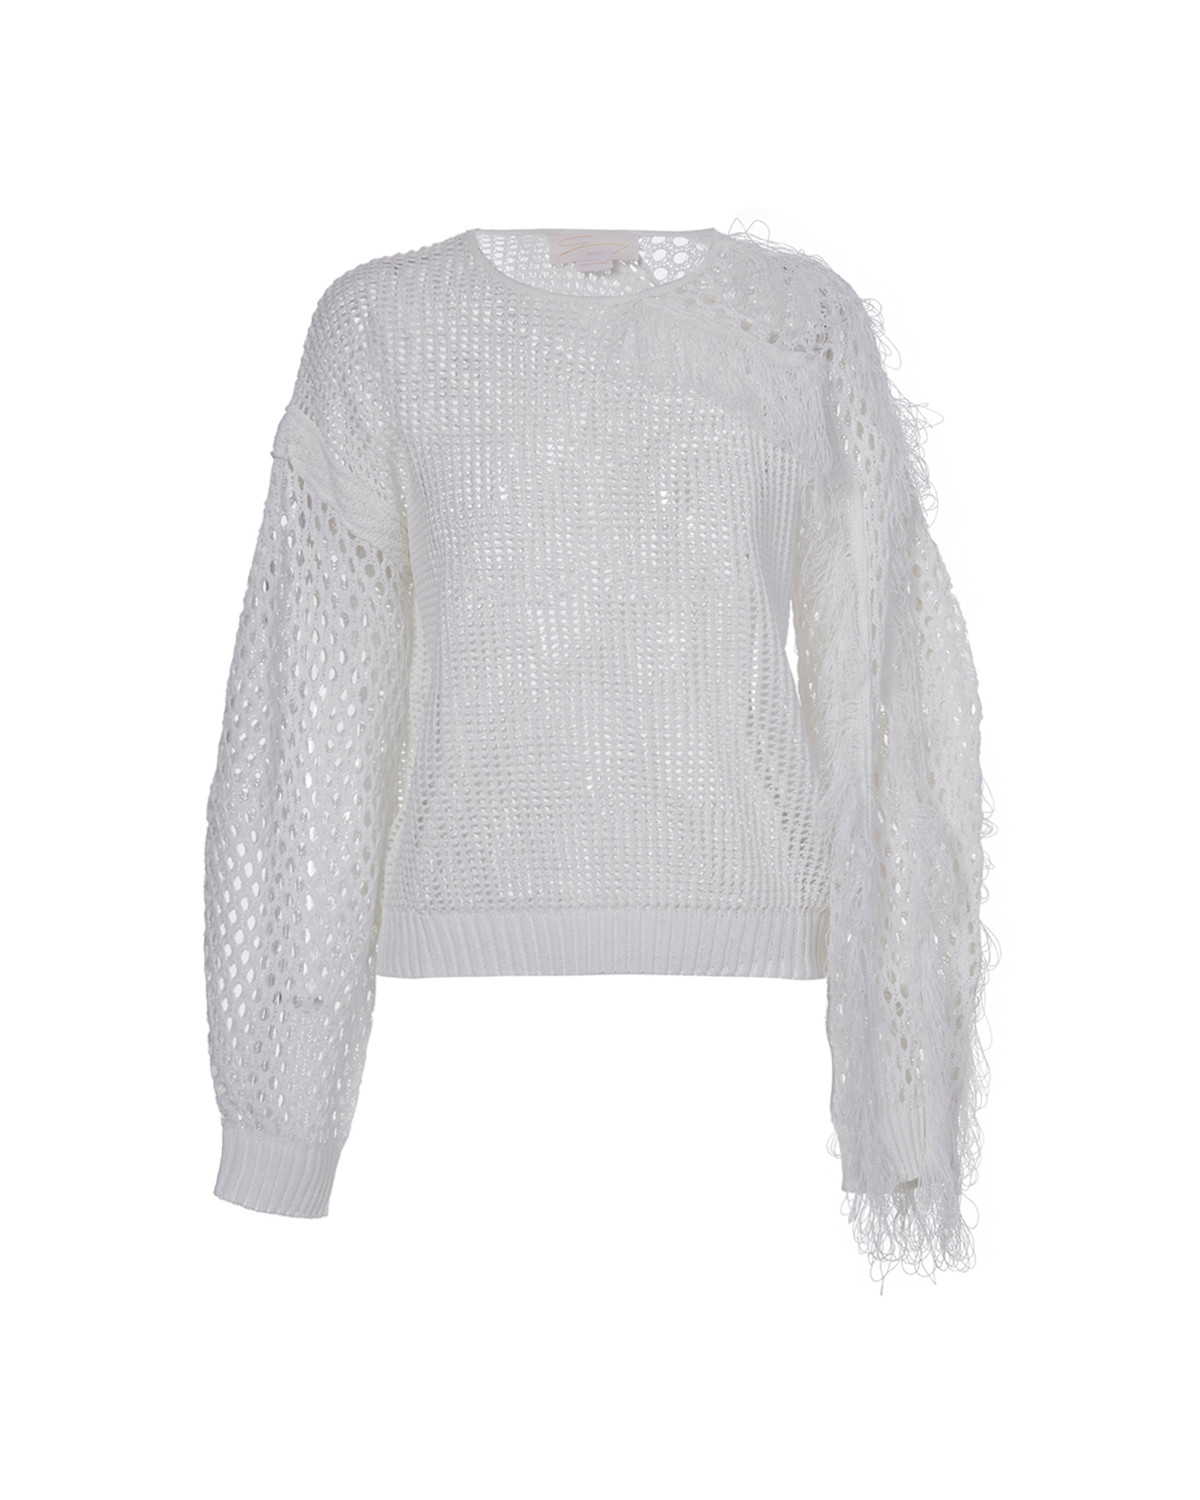 White knit sweater with fringe